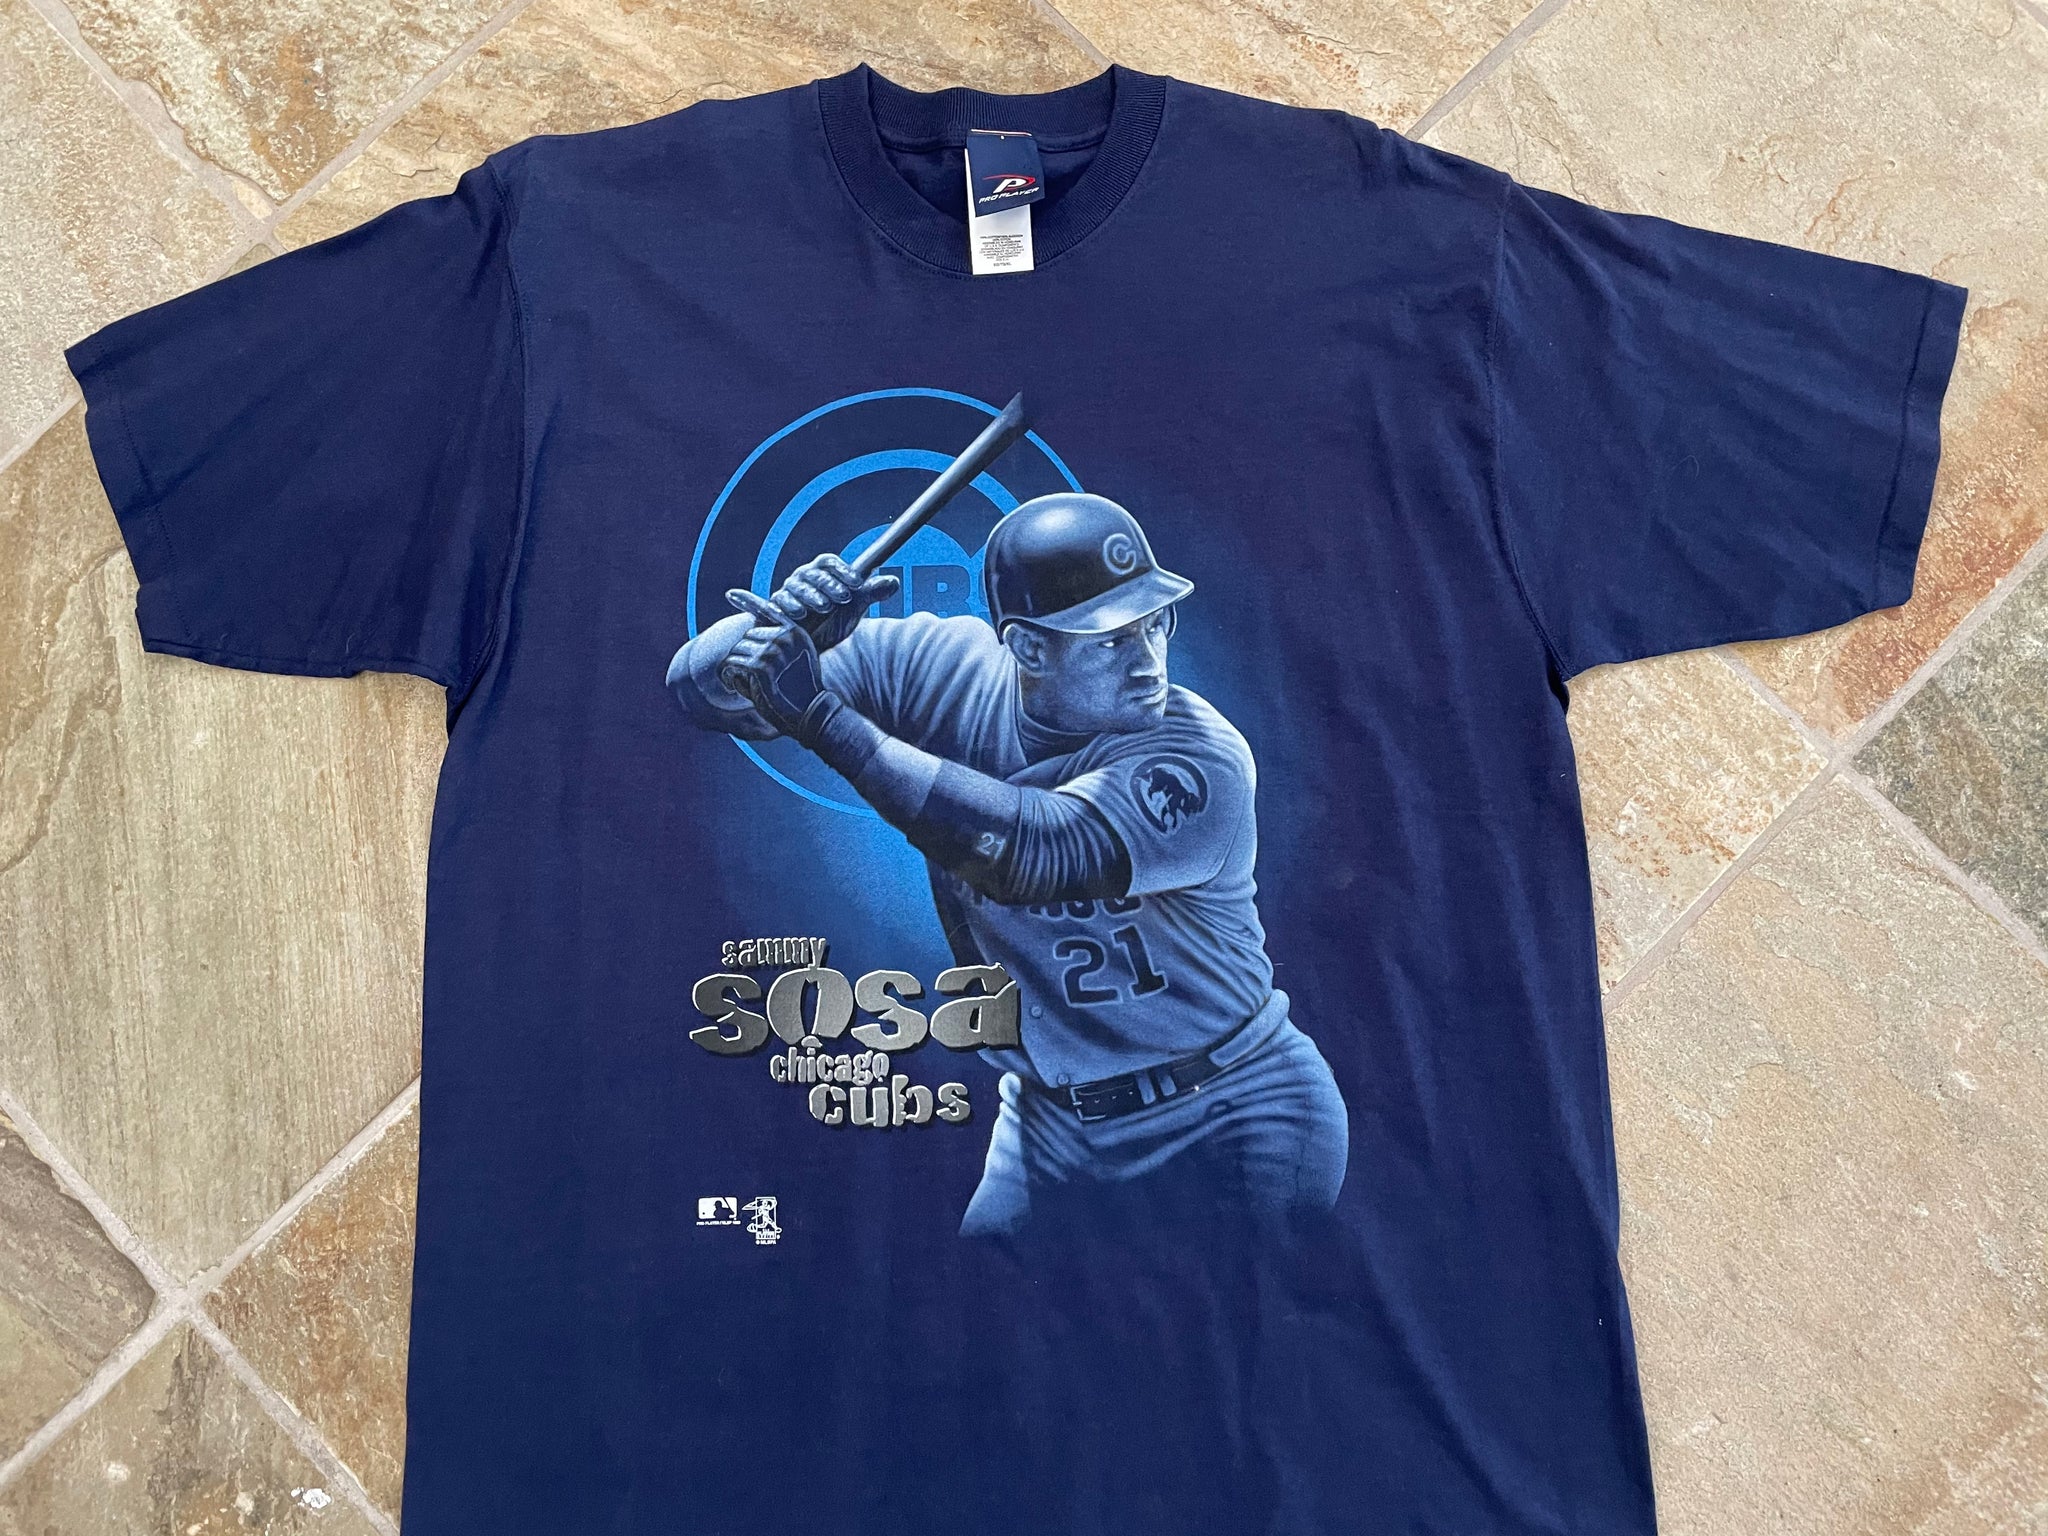 Sammy Sosa 21 Chicago Cubs baseball player Vintage shirt, hoodie